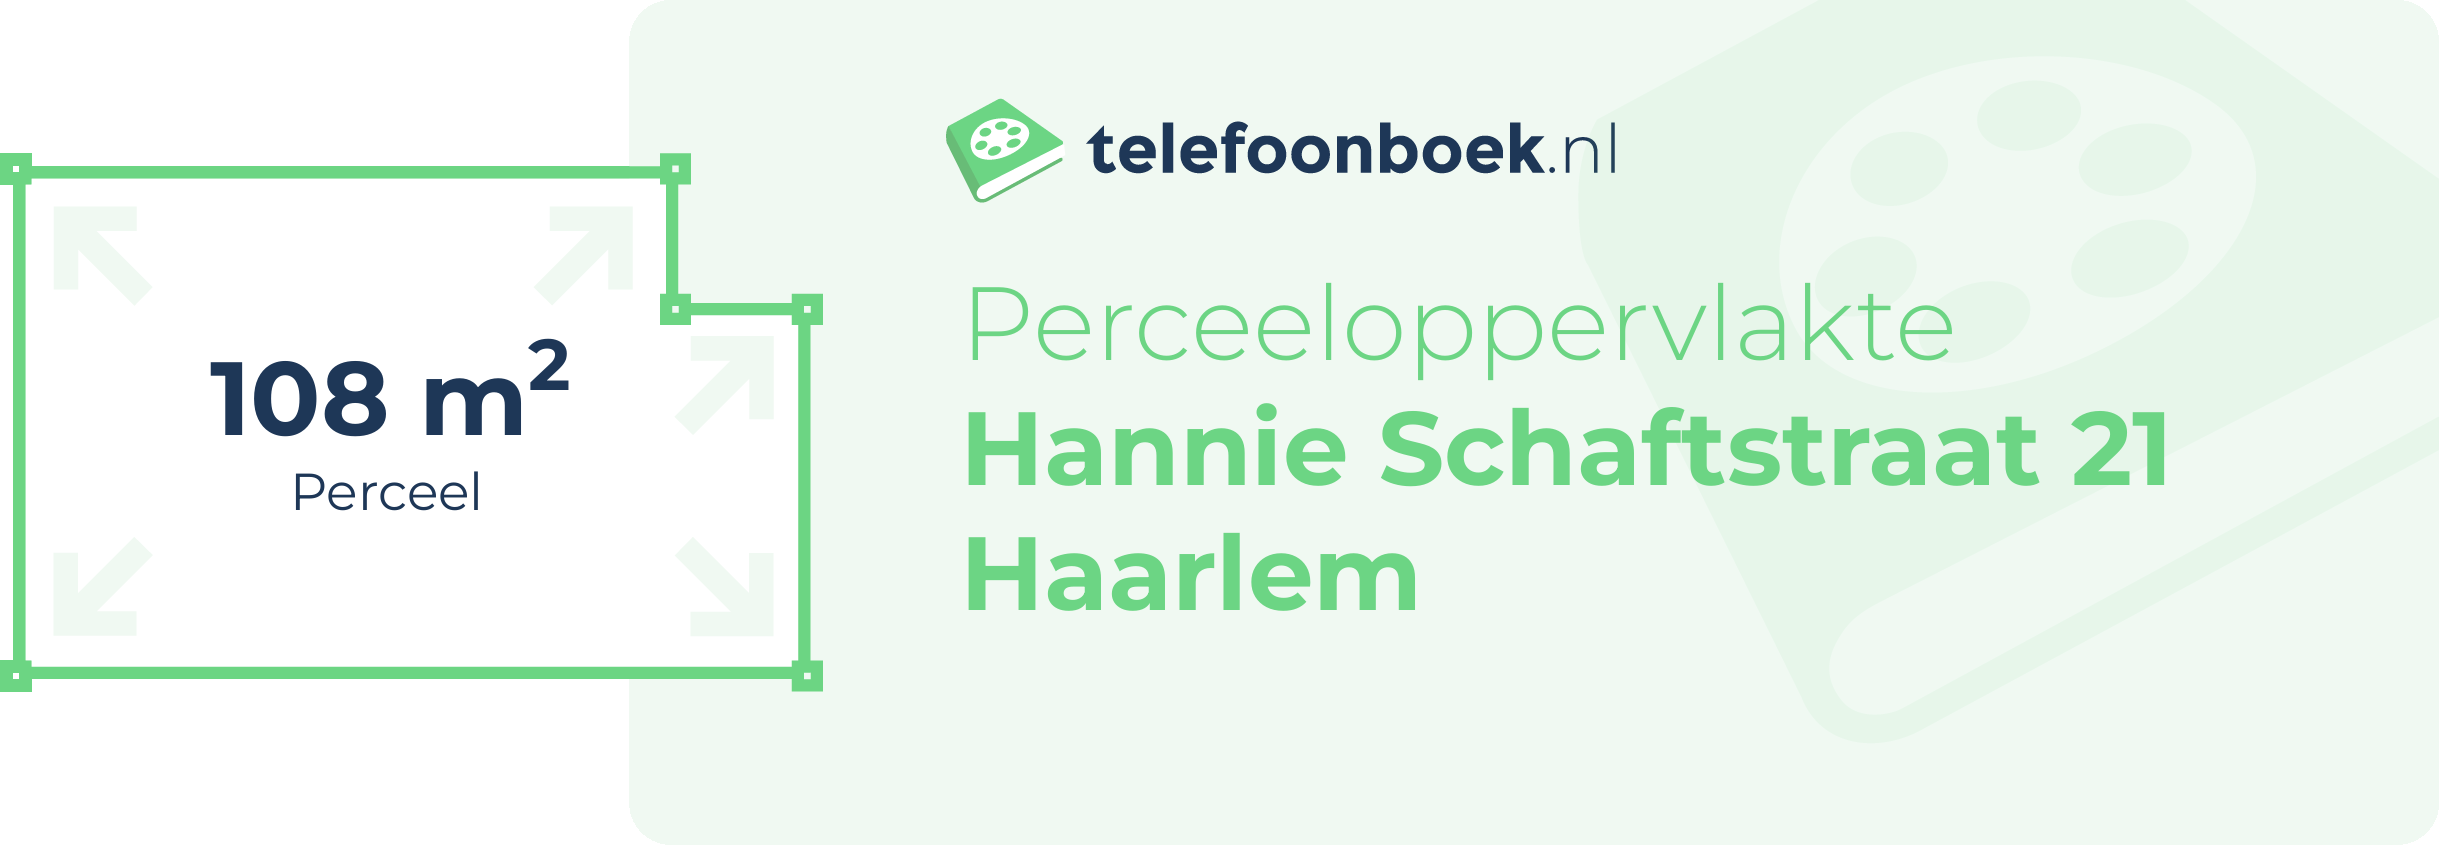 Perceeloppervlakte Hannie Schaftstraat 21 Haarlem